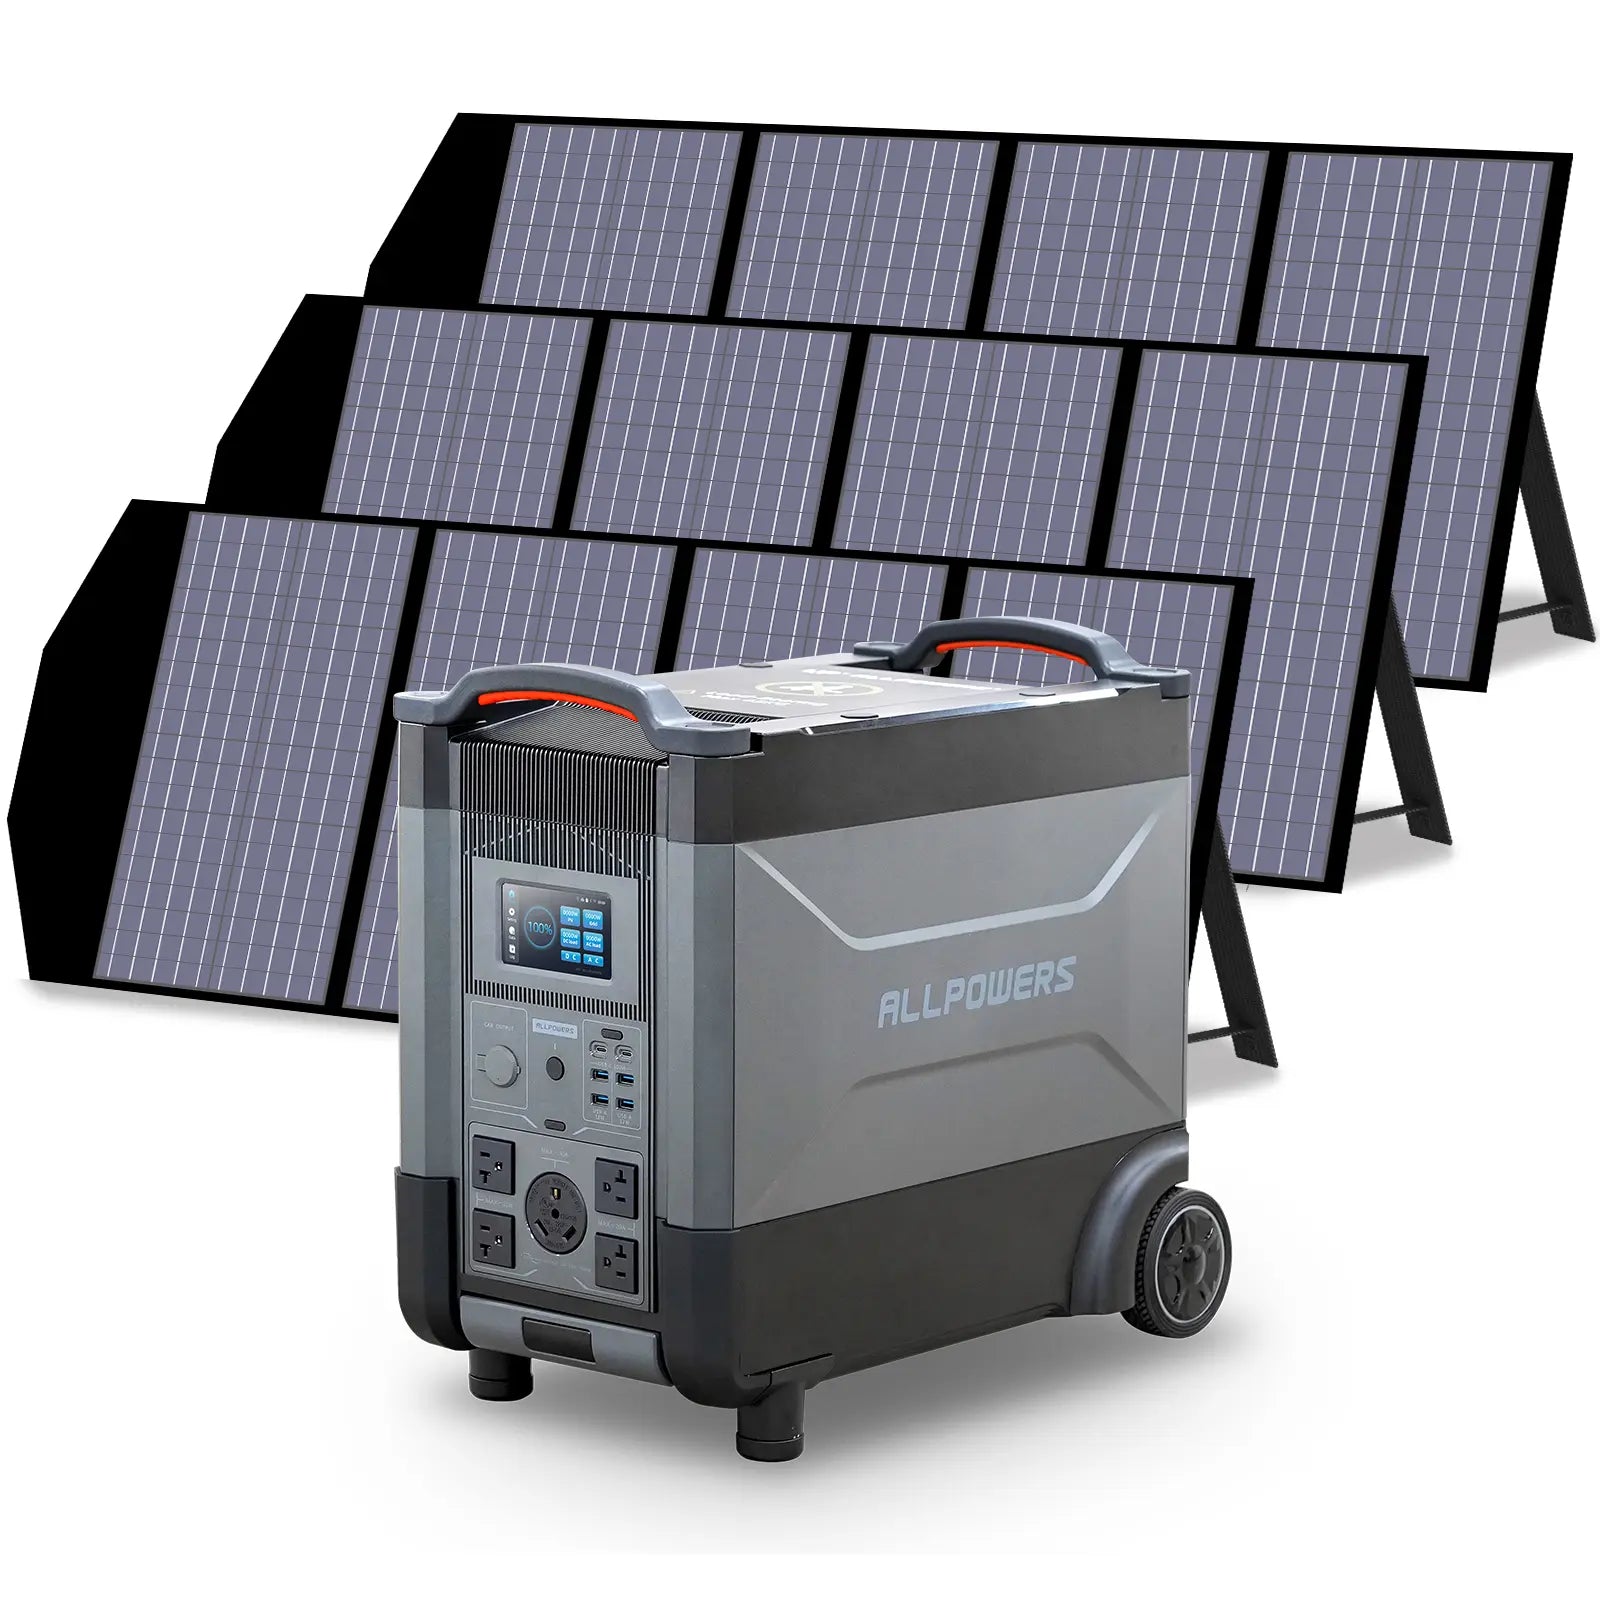 ALLPOWERS Solar Generator Kit 4000W (R4000 + 3 x SP029 140W Solar Panel)